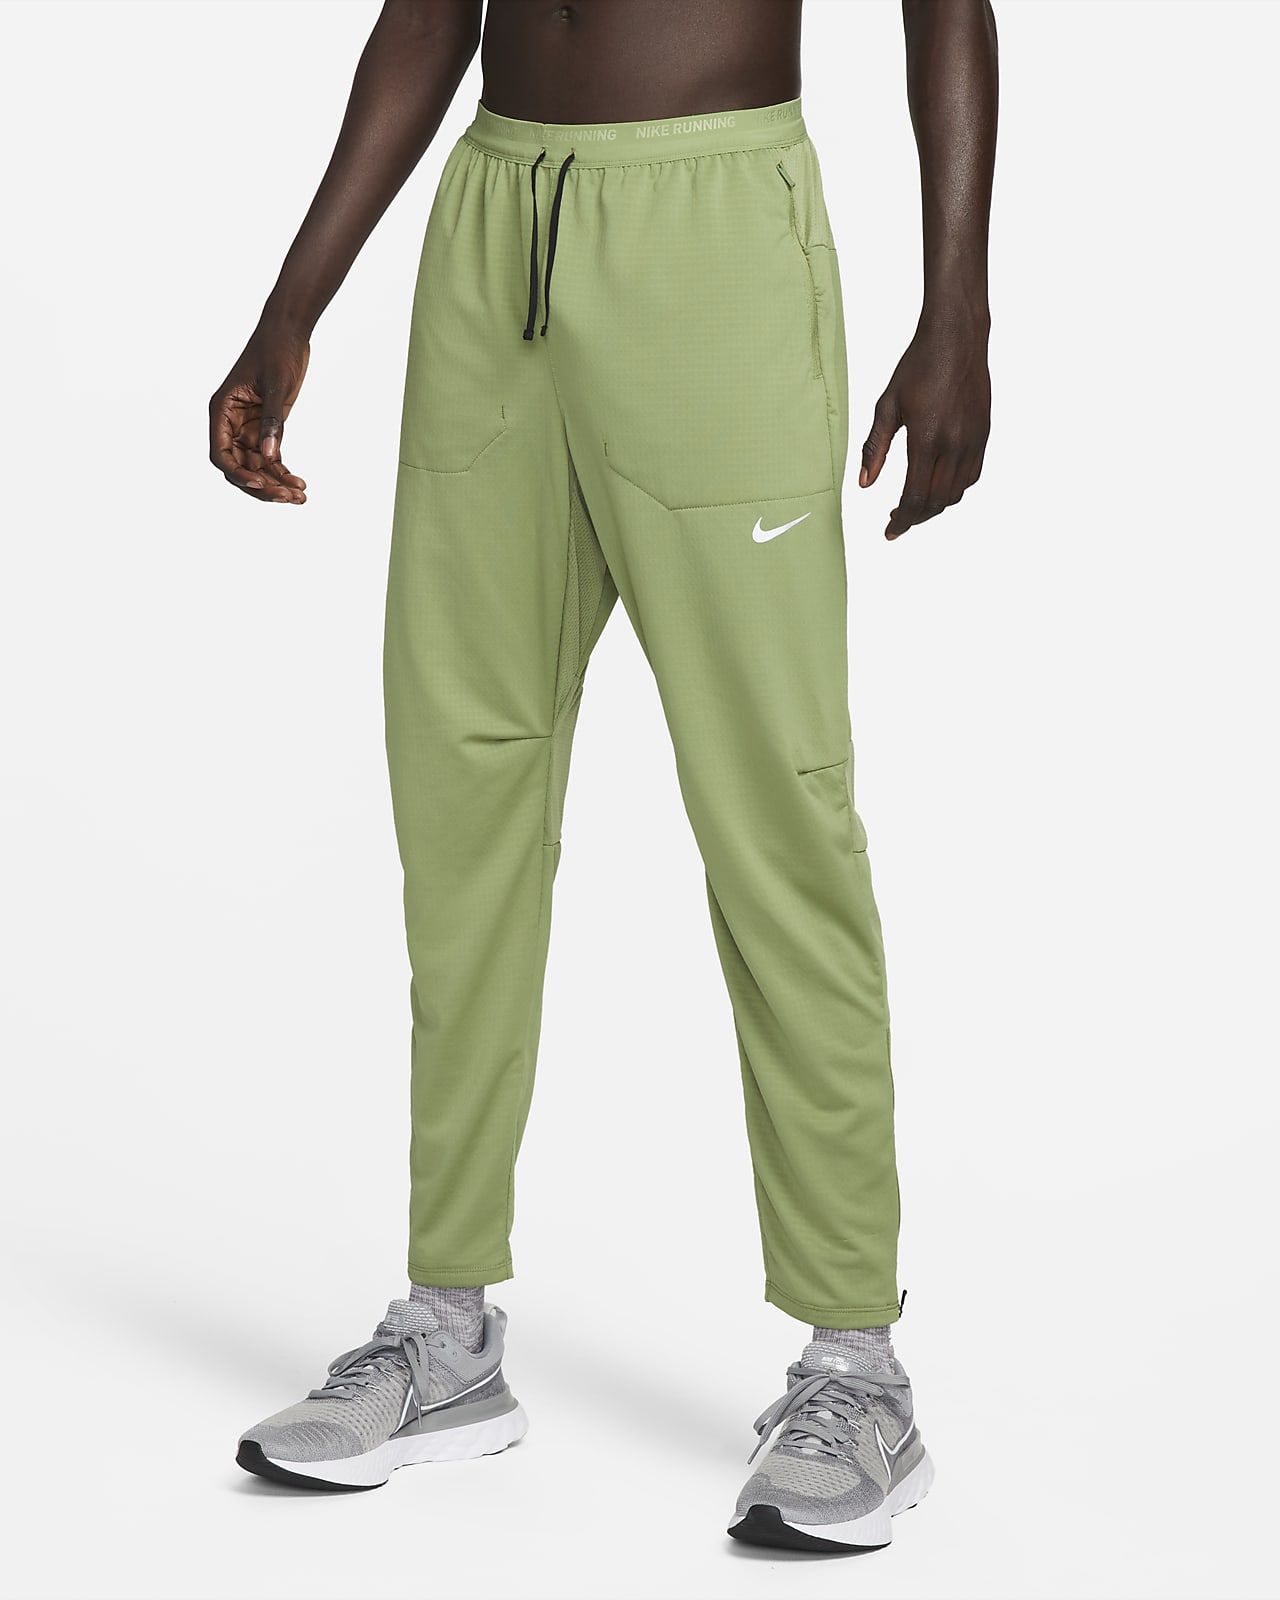 Nike Dri Fit Running Pants For Women Size XL - Pockets